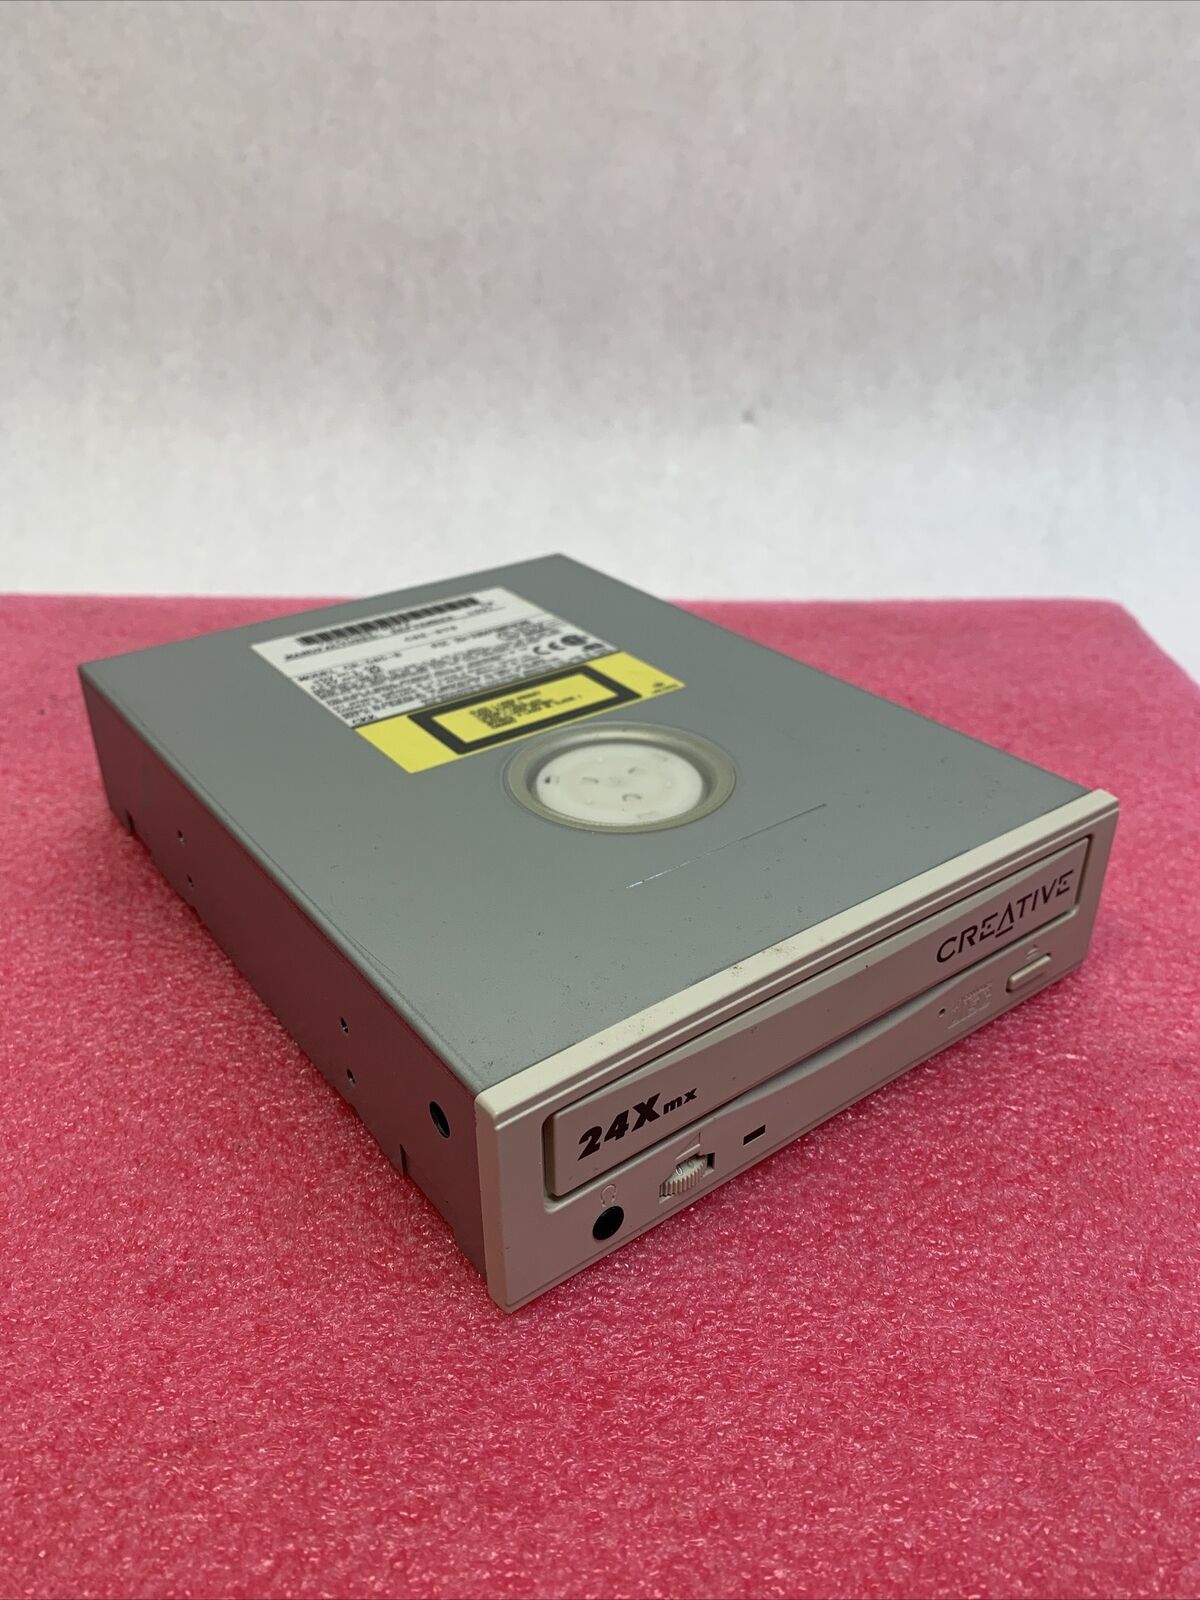 Creative CR-585-B CRE-BTB Optical Drive Tested SEP 1997